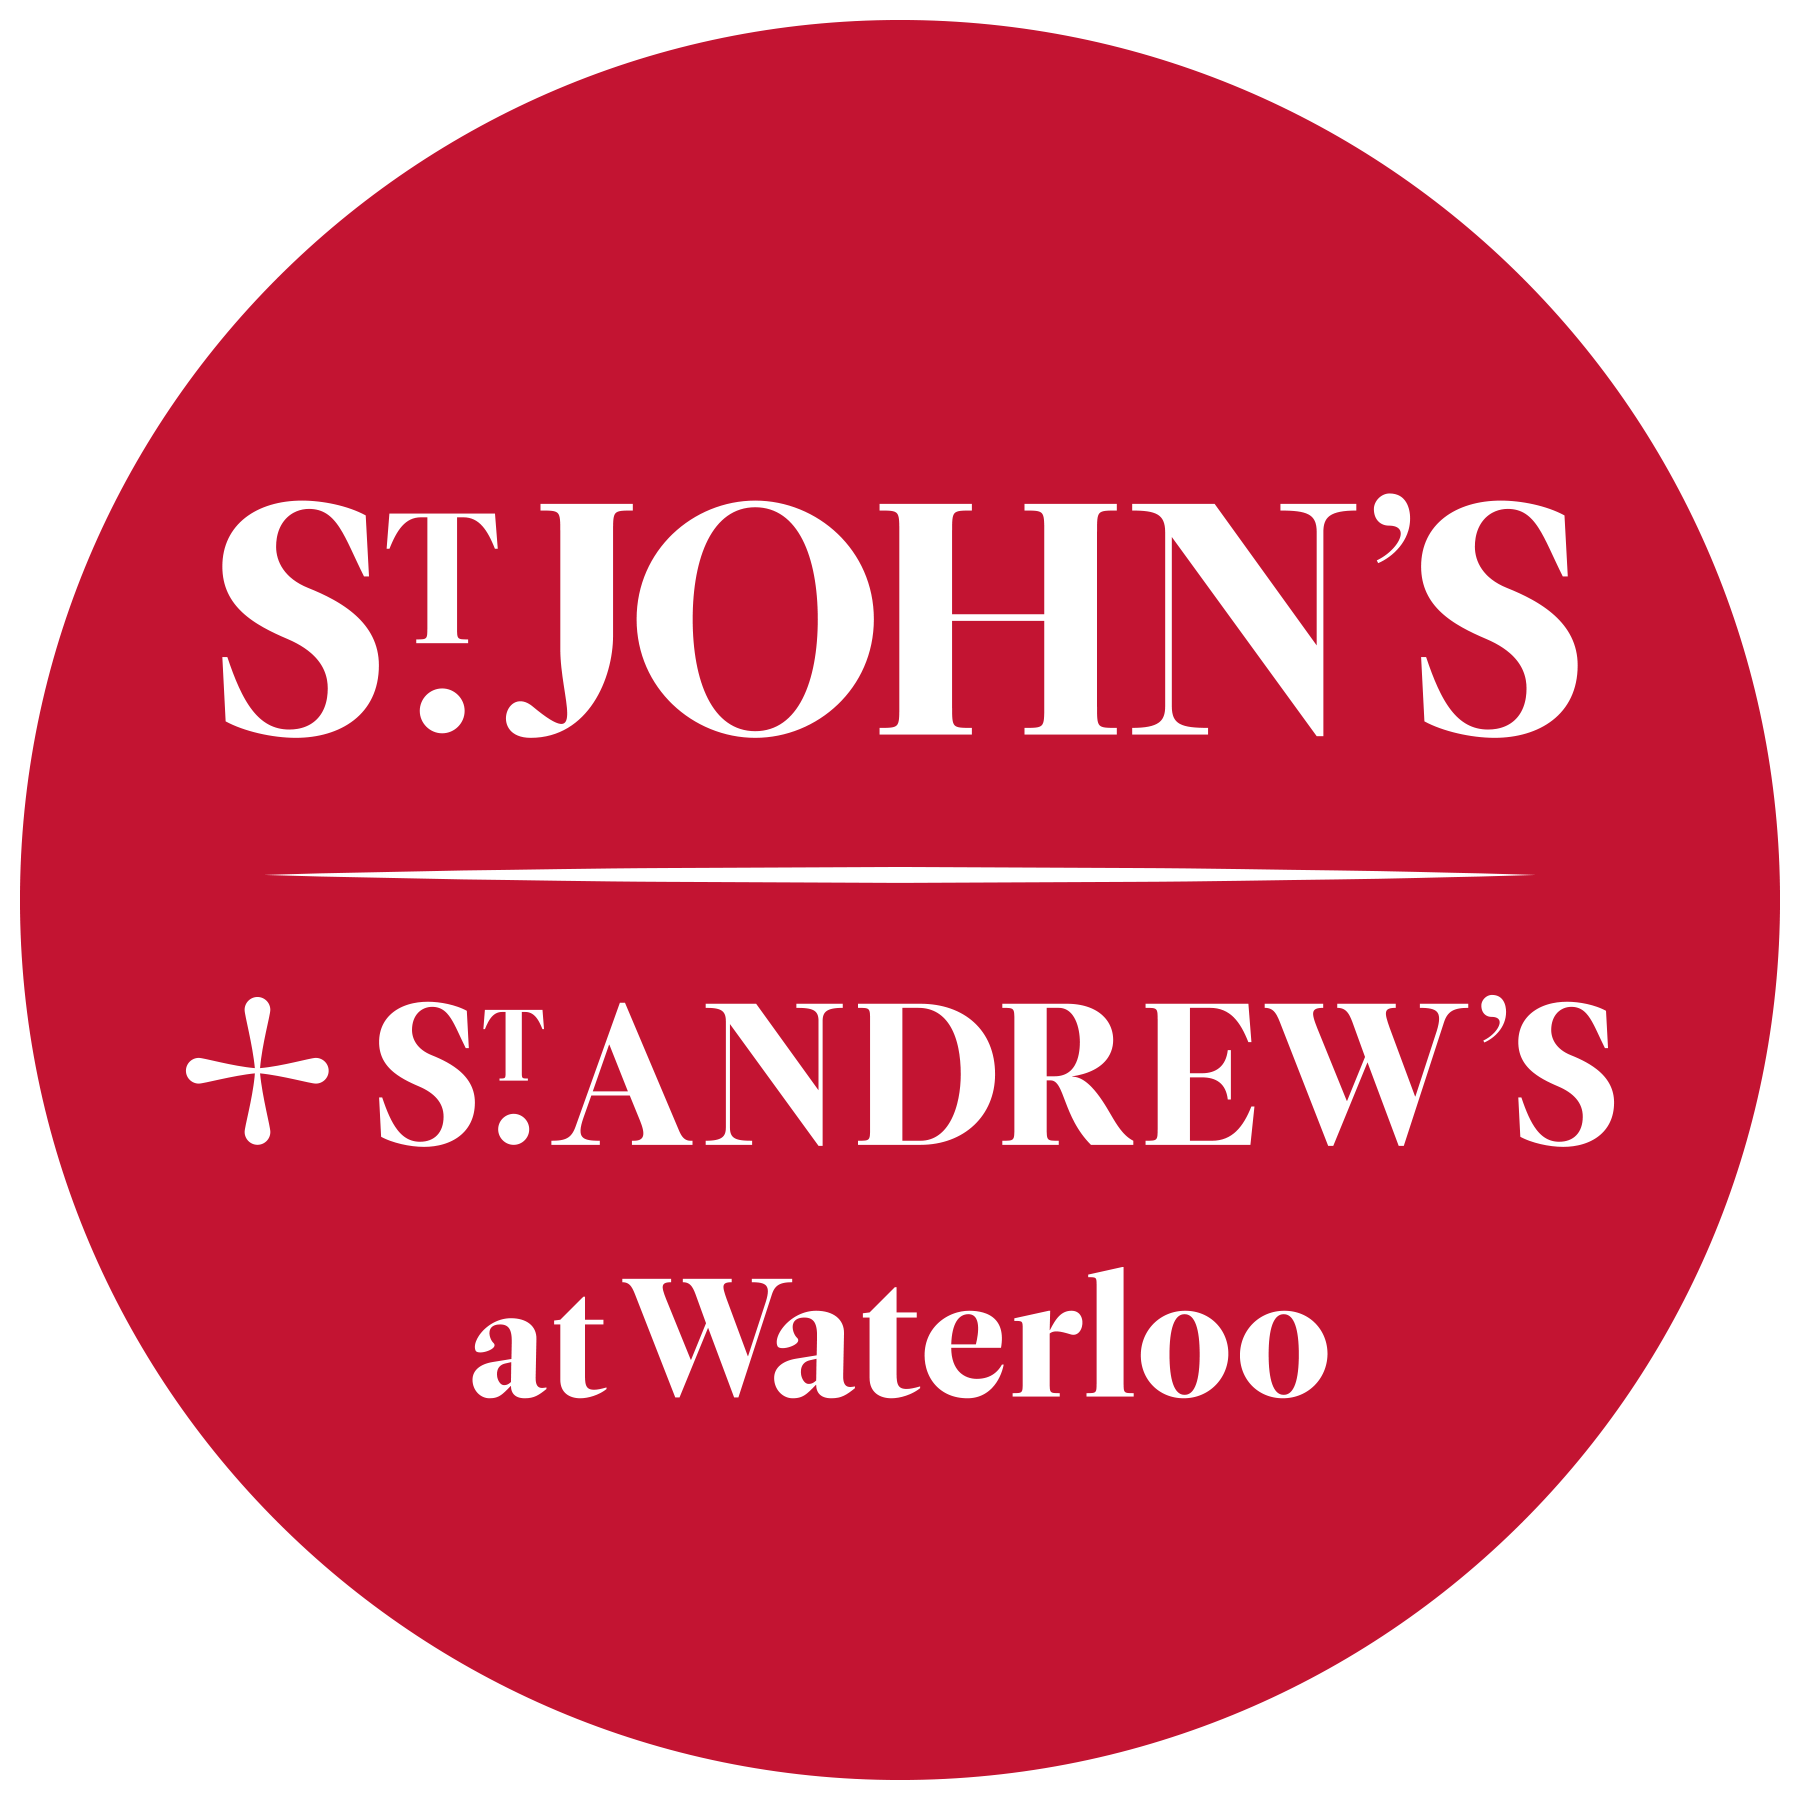 St John's Waterloo logo. 